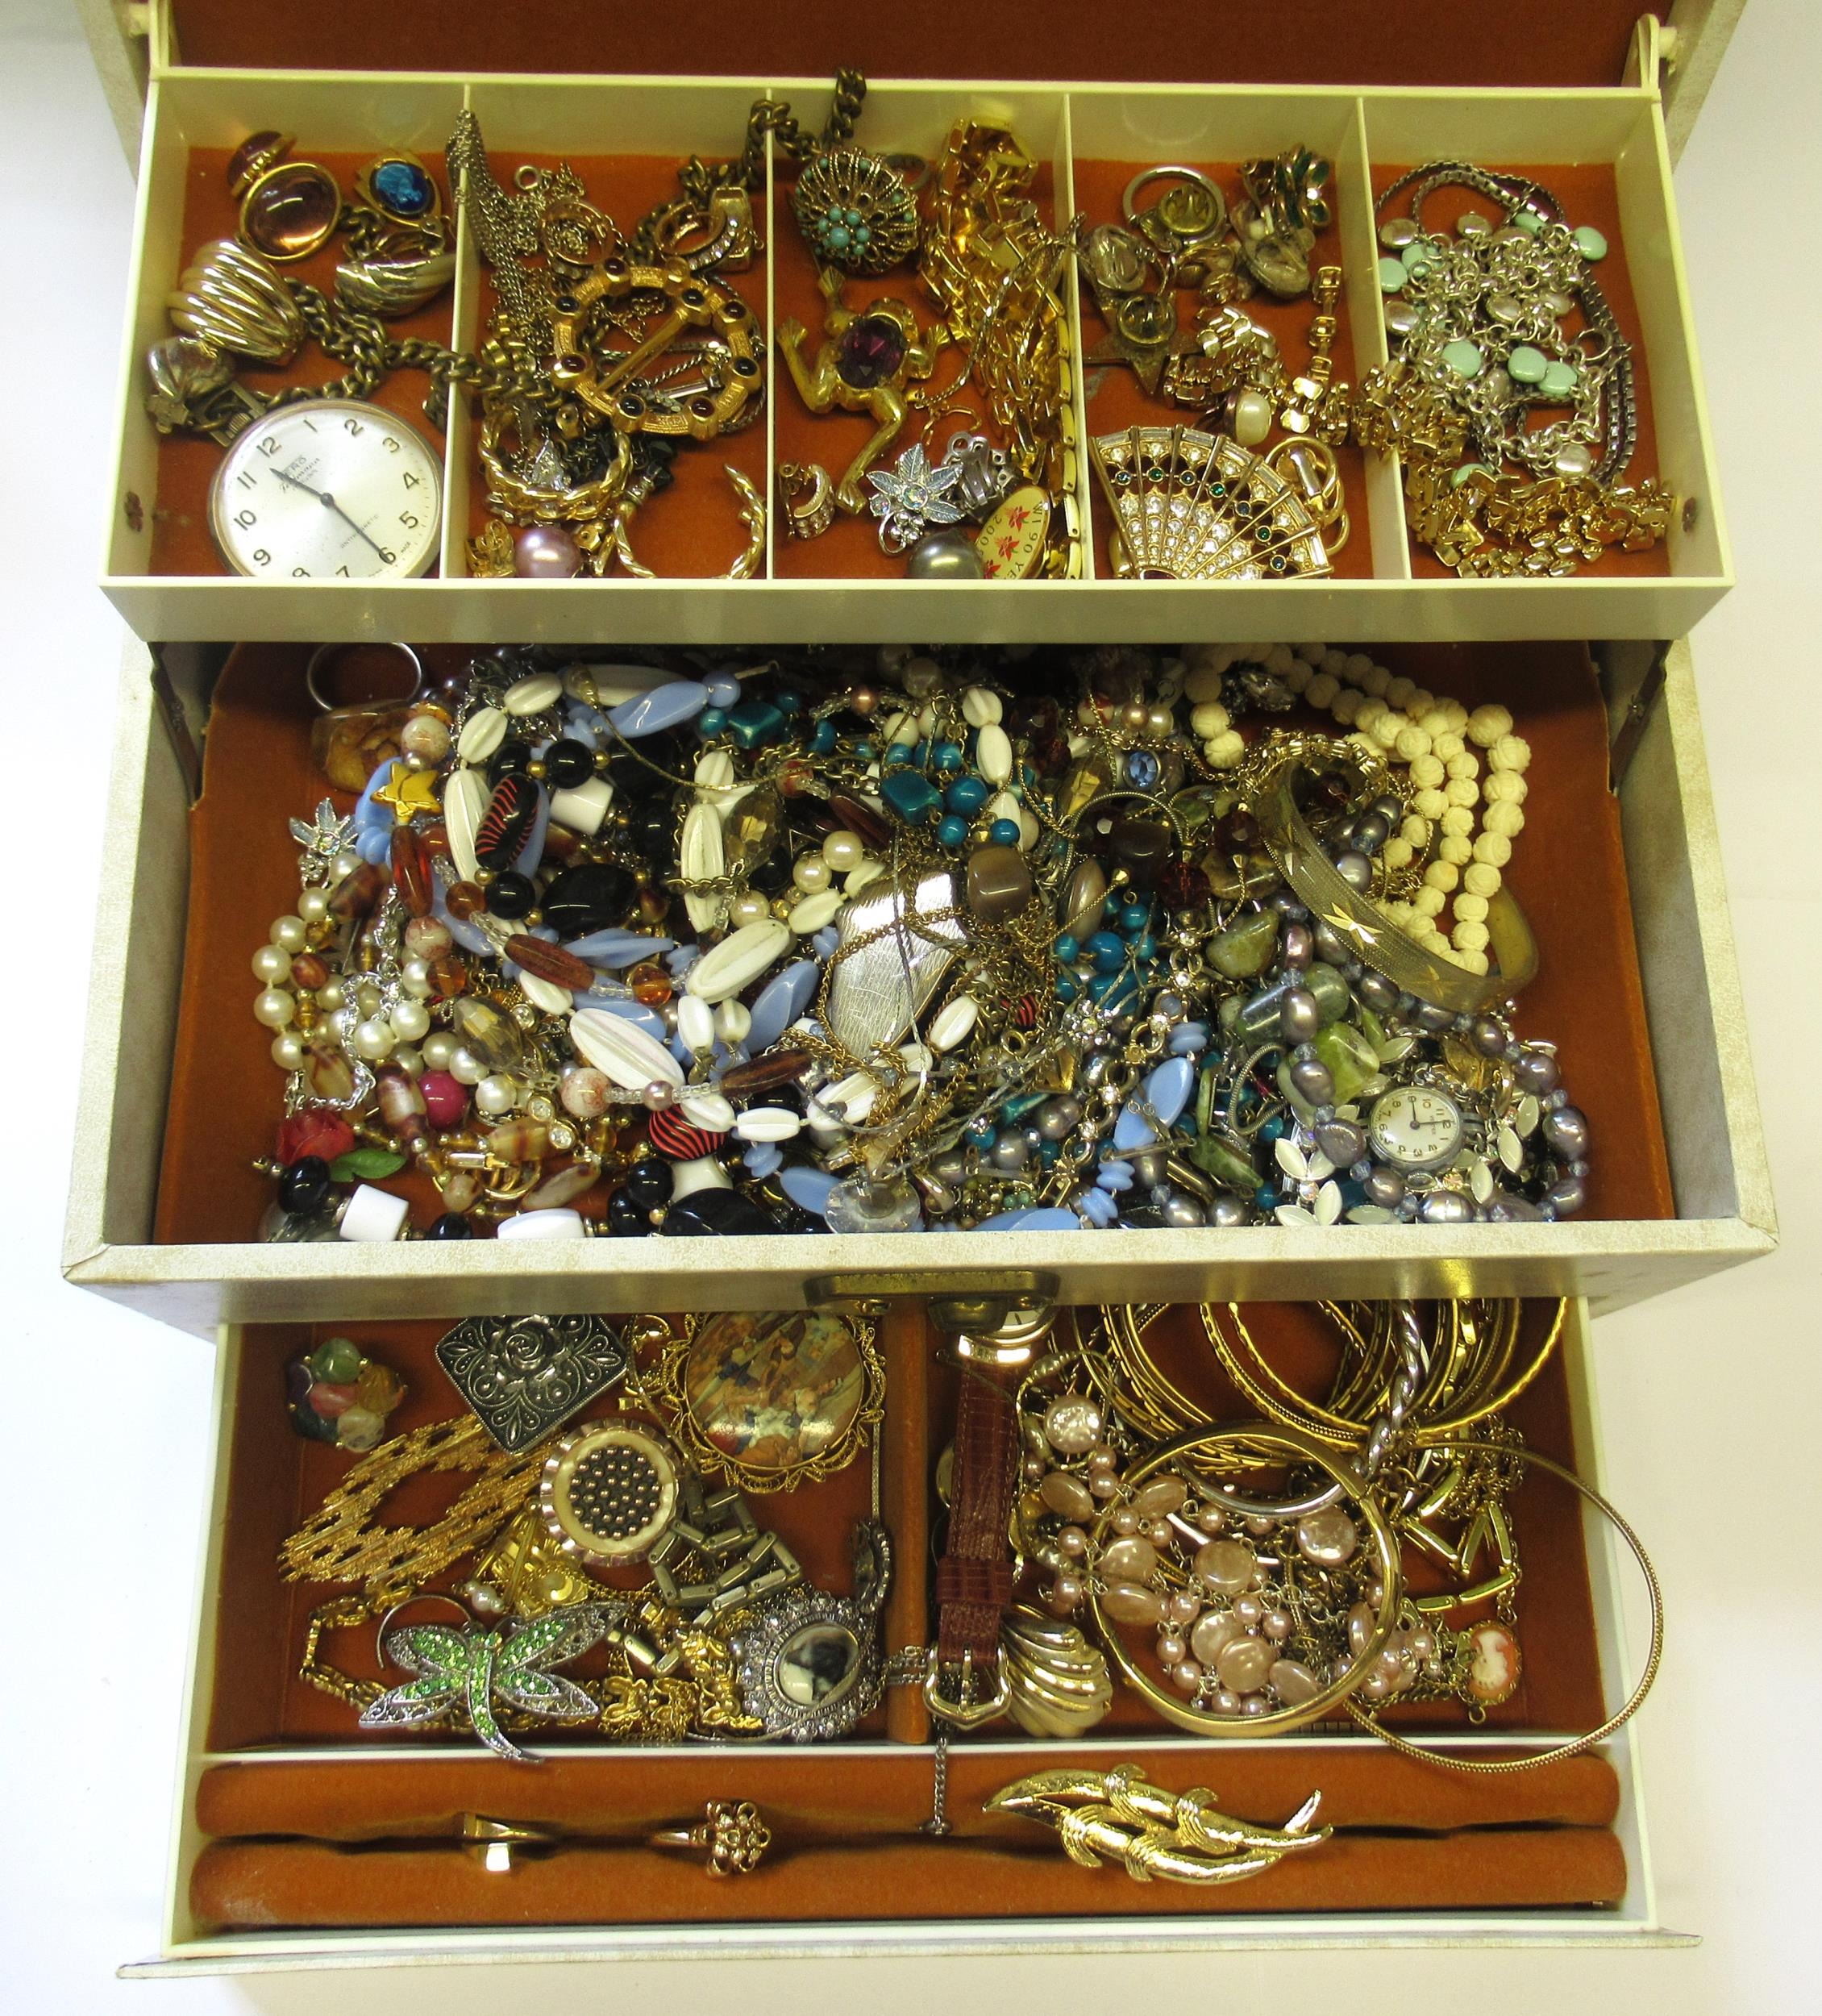 Cream jewellery box containing a quantity of various costume jewellery